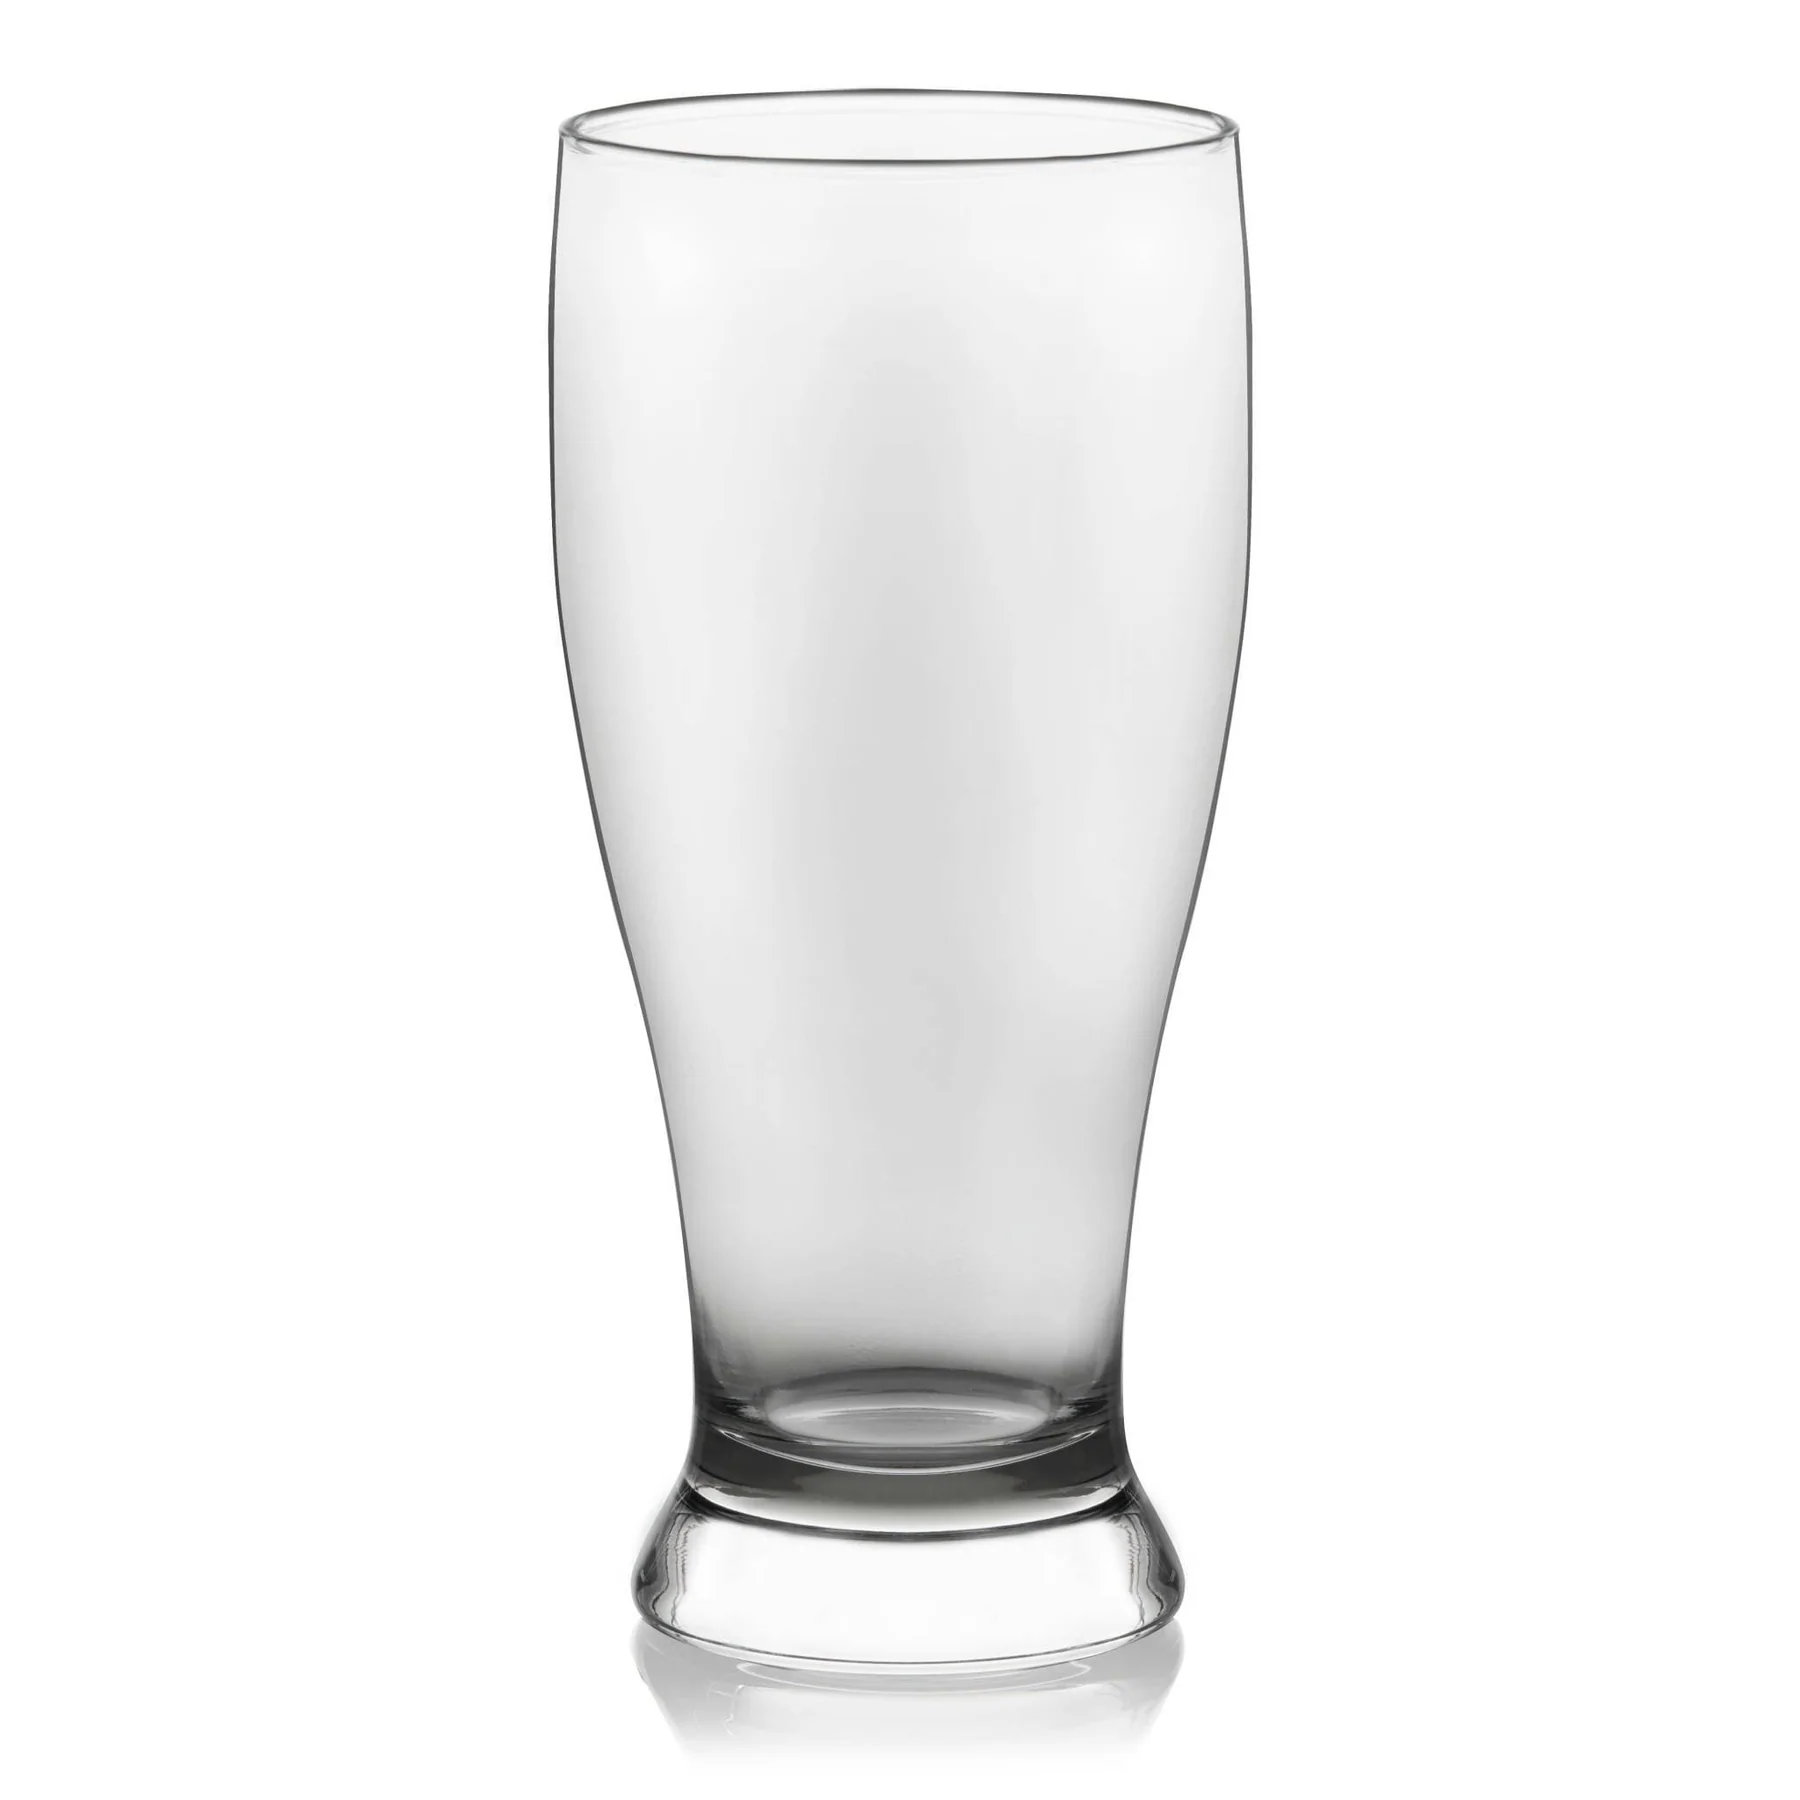 JoyJolt Grant Pint Beer Glass (Set of 4) Classic Pub Style Beer Glasses 